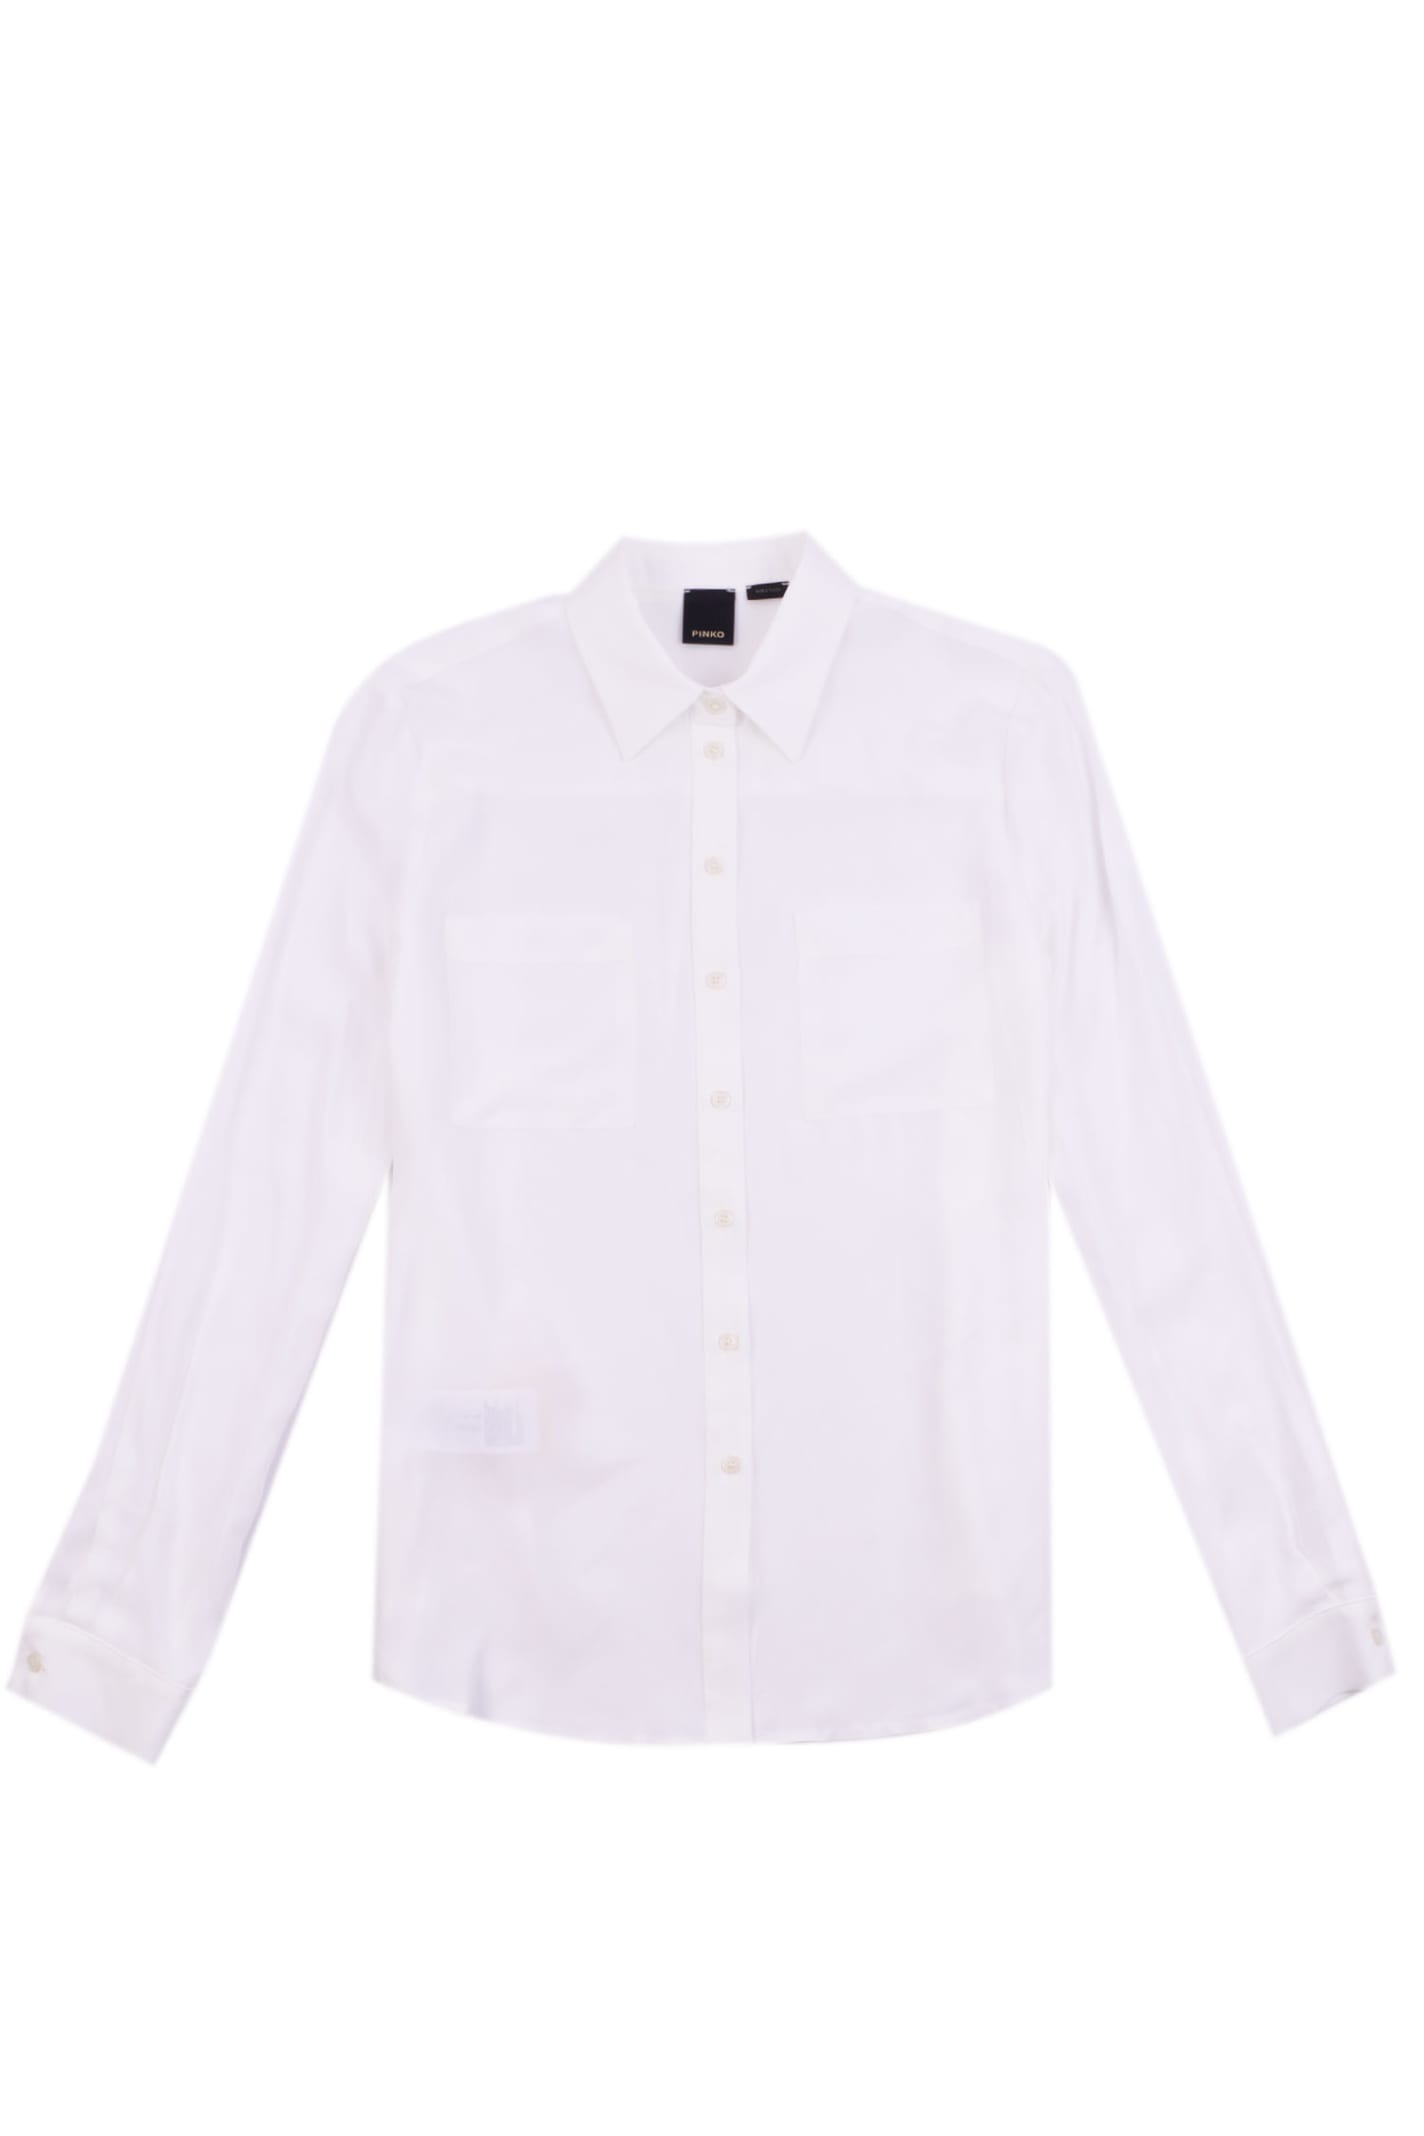 Pinko White Shirt With Pockets